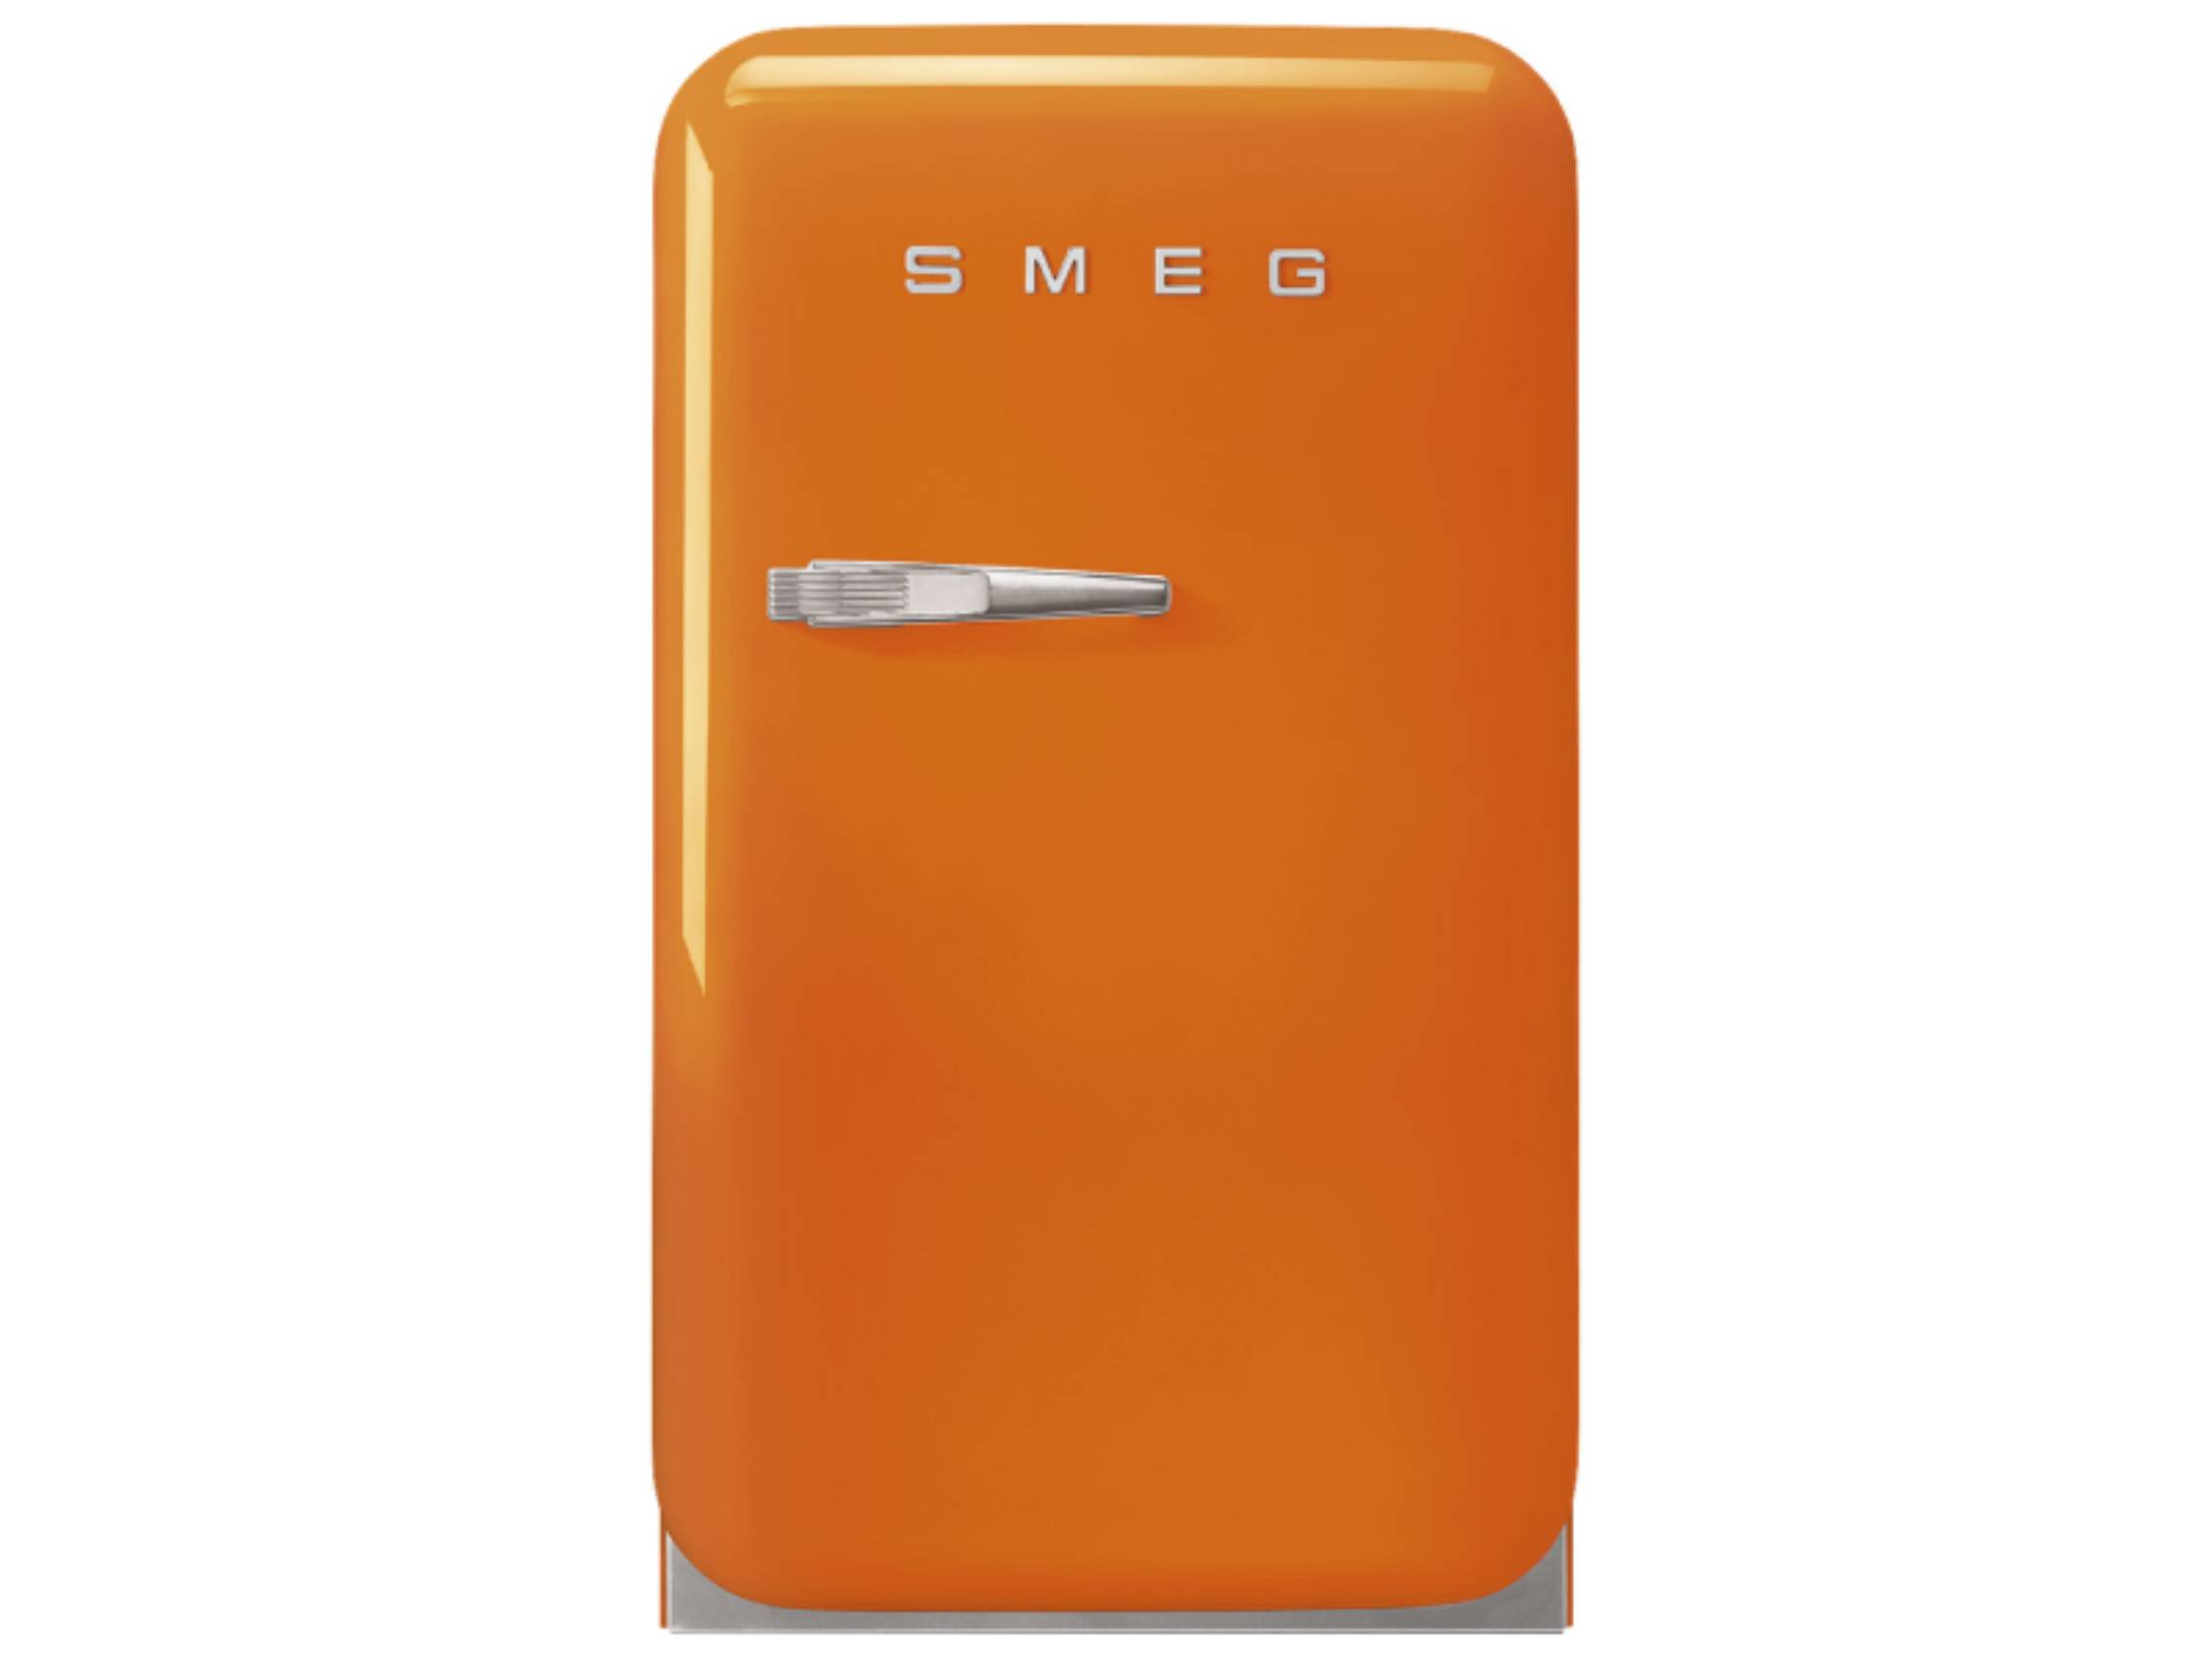 Smeg Refrigerators - 50s Retro Style Mini Compact Right Hinge 1.34